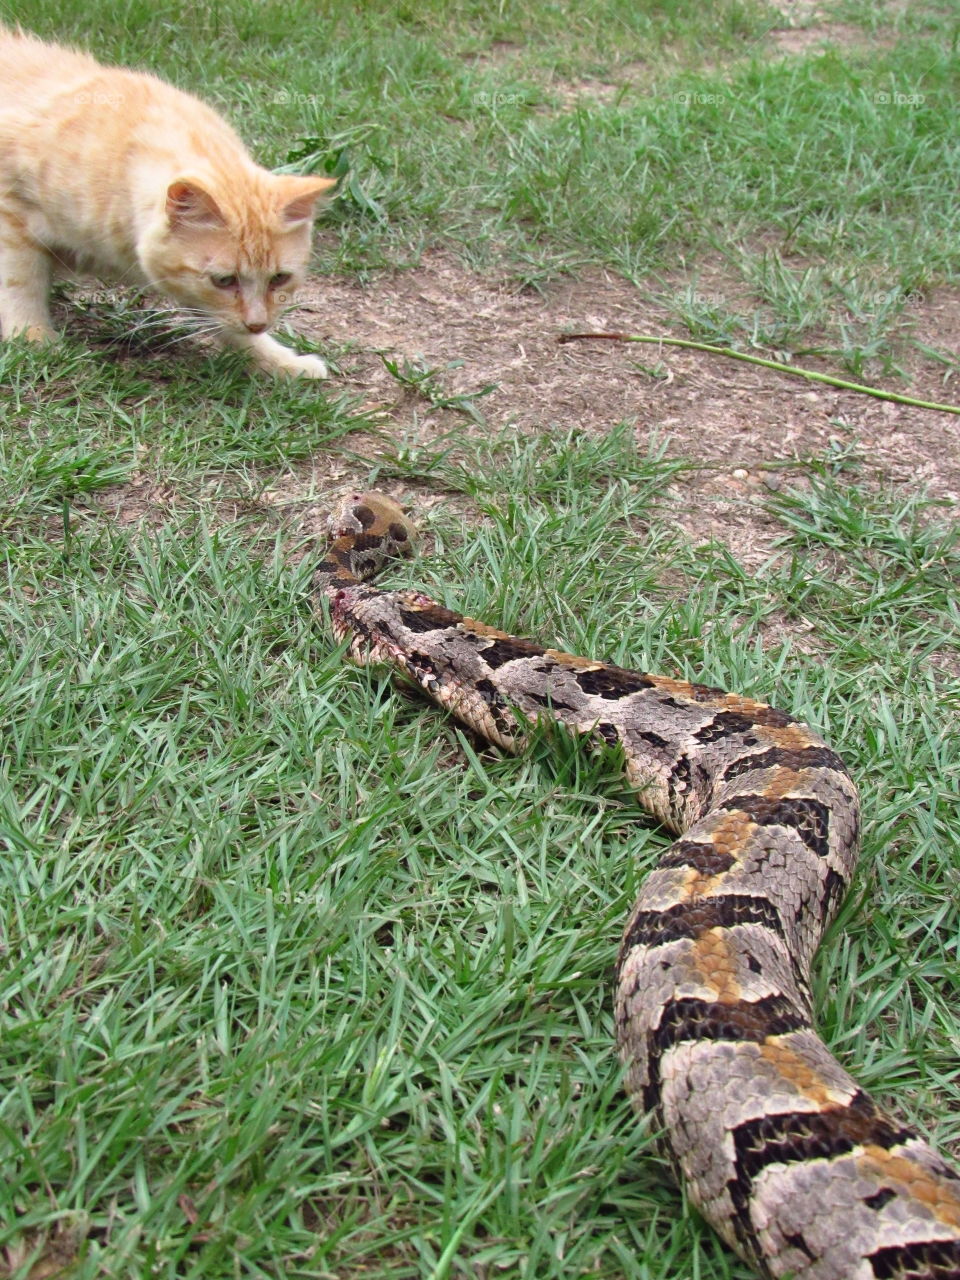 cat biting tail of rattlesnake in grass